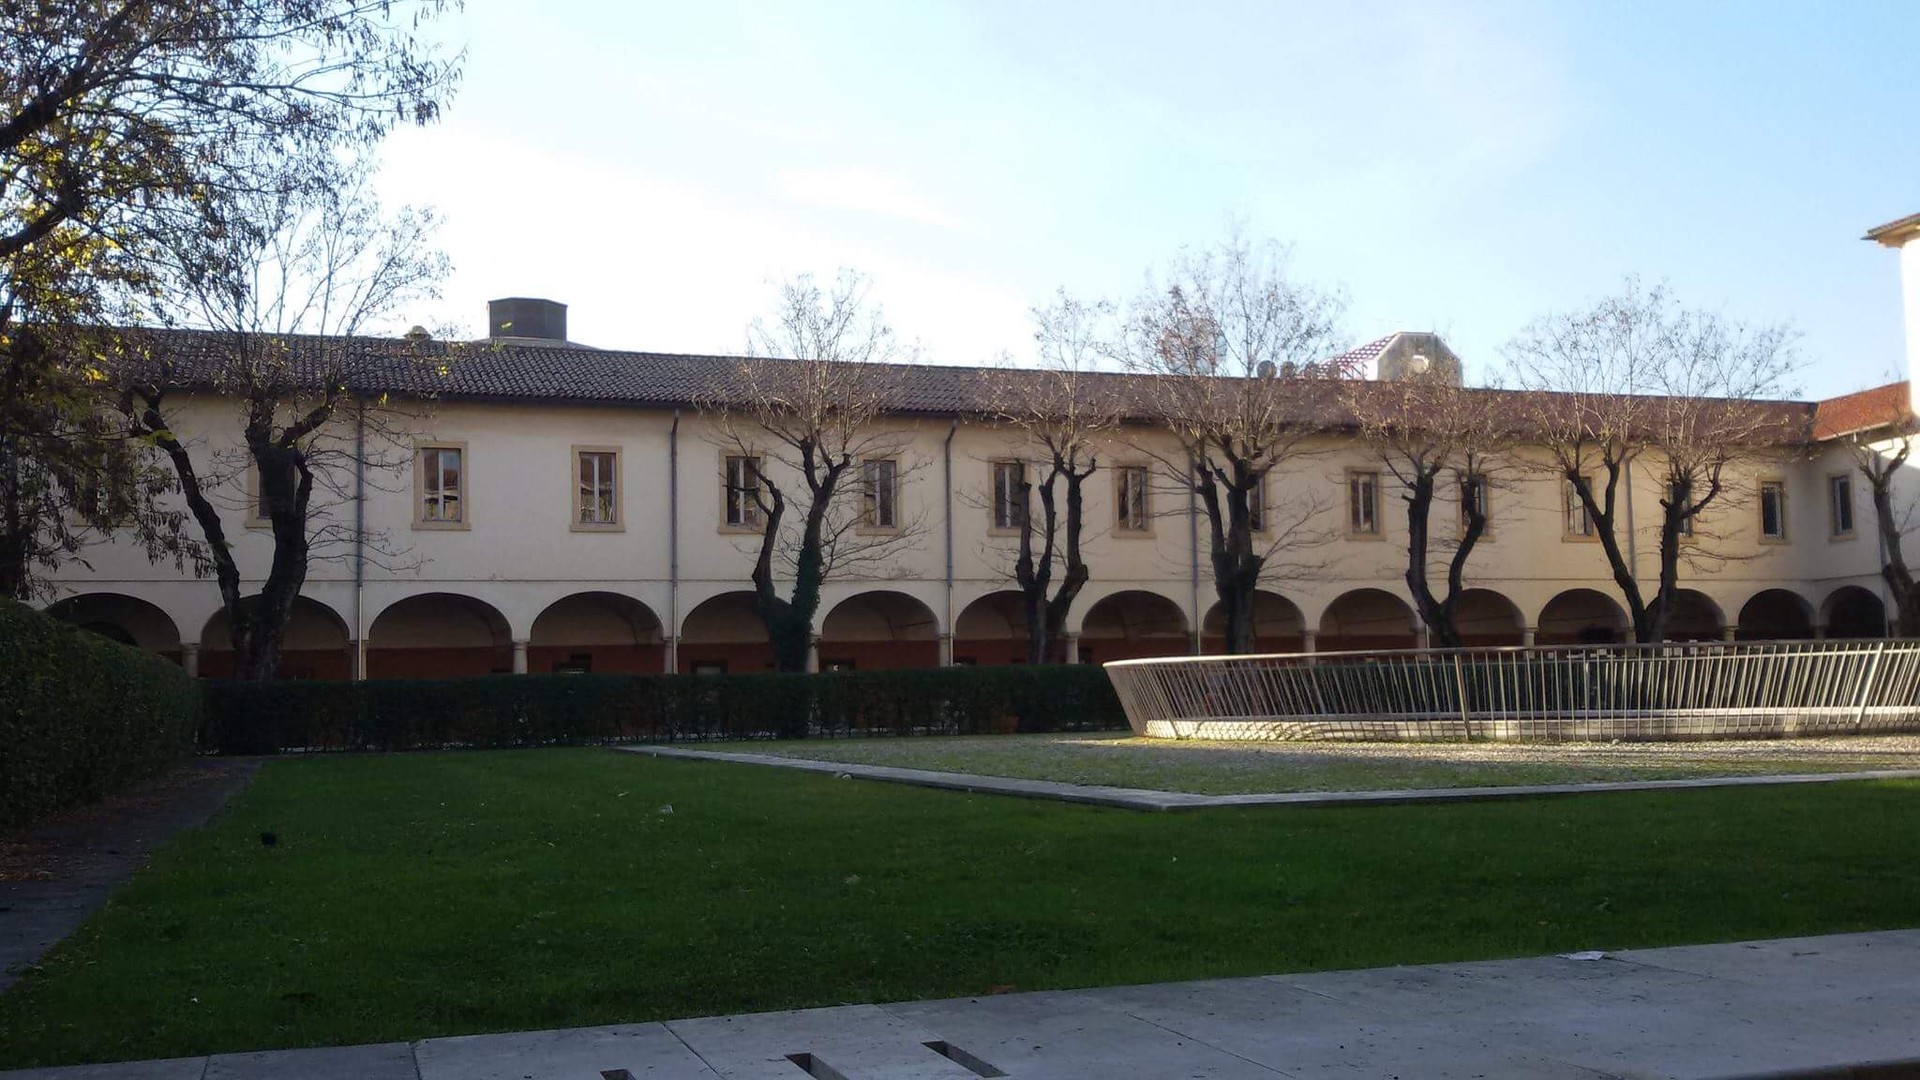 University of Verona, Italy | What to do in Verona